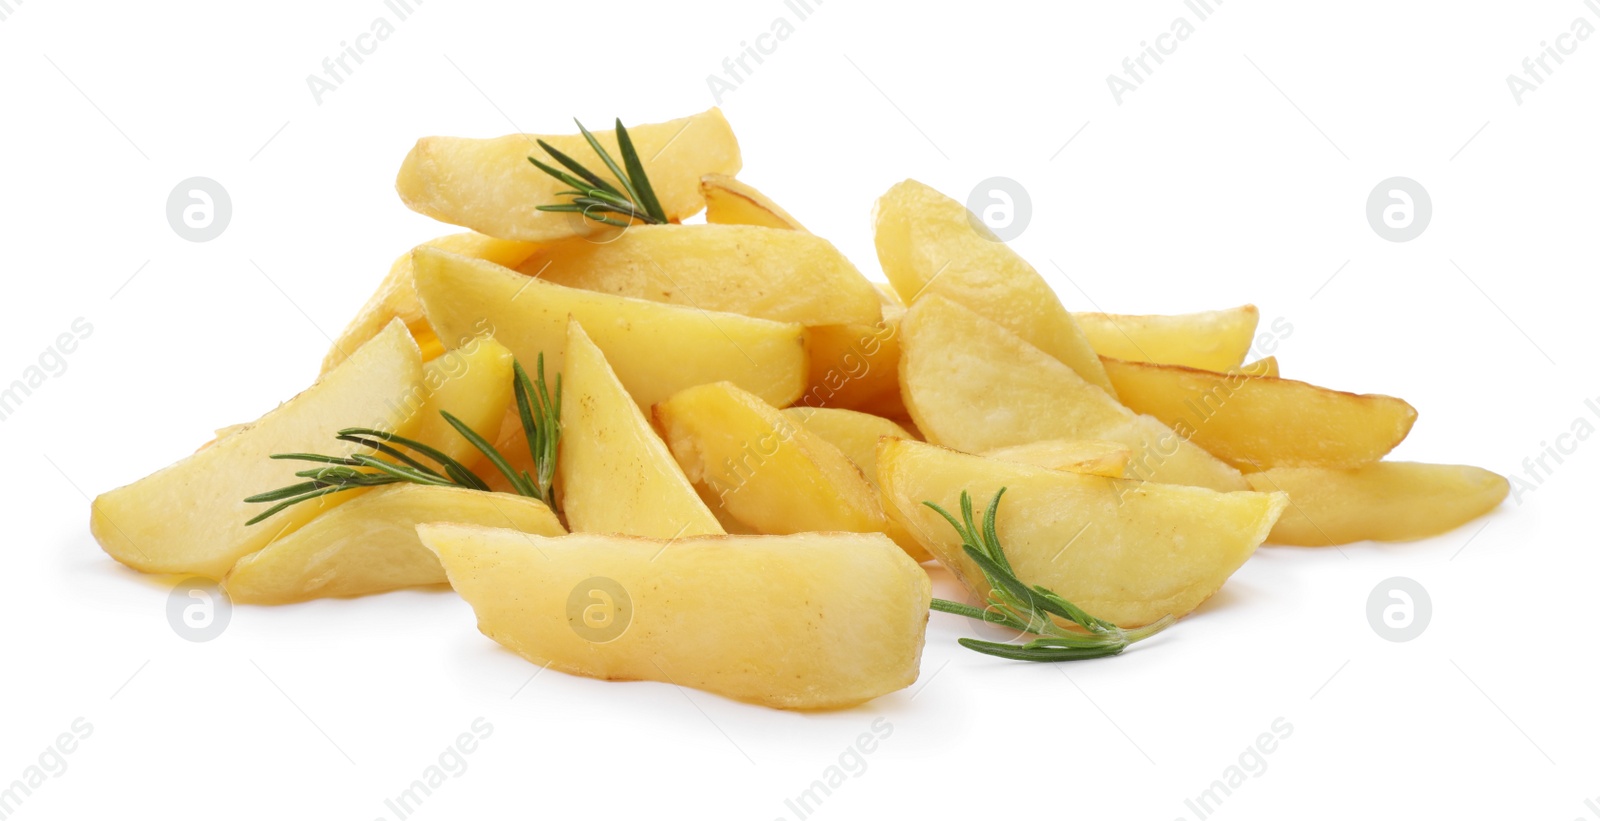 Photo of Tasty baked potato wedges with rosemary on white background